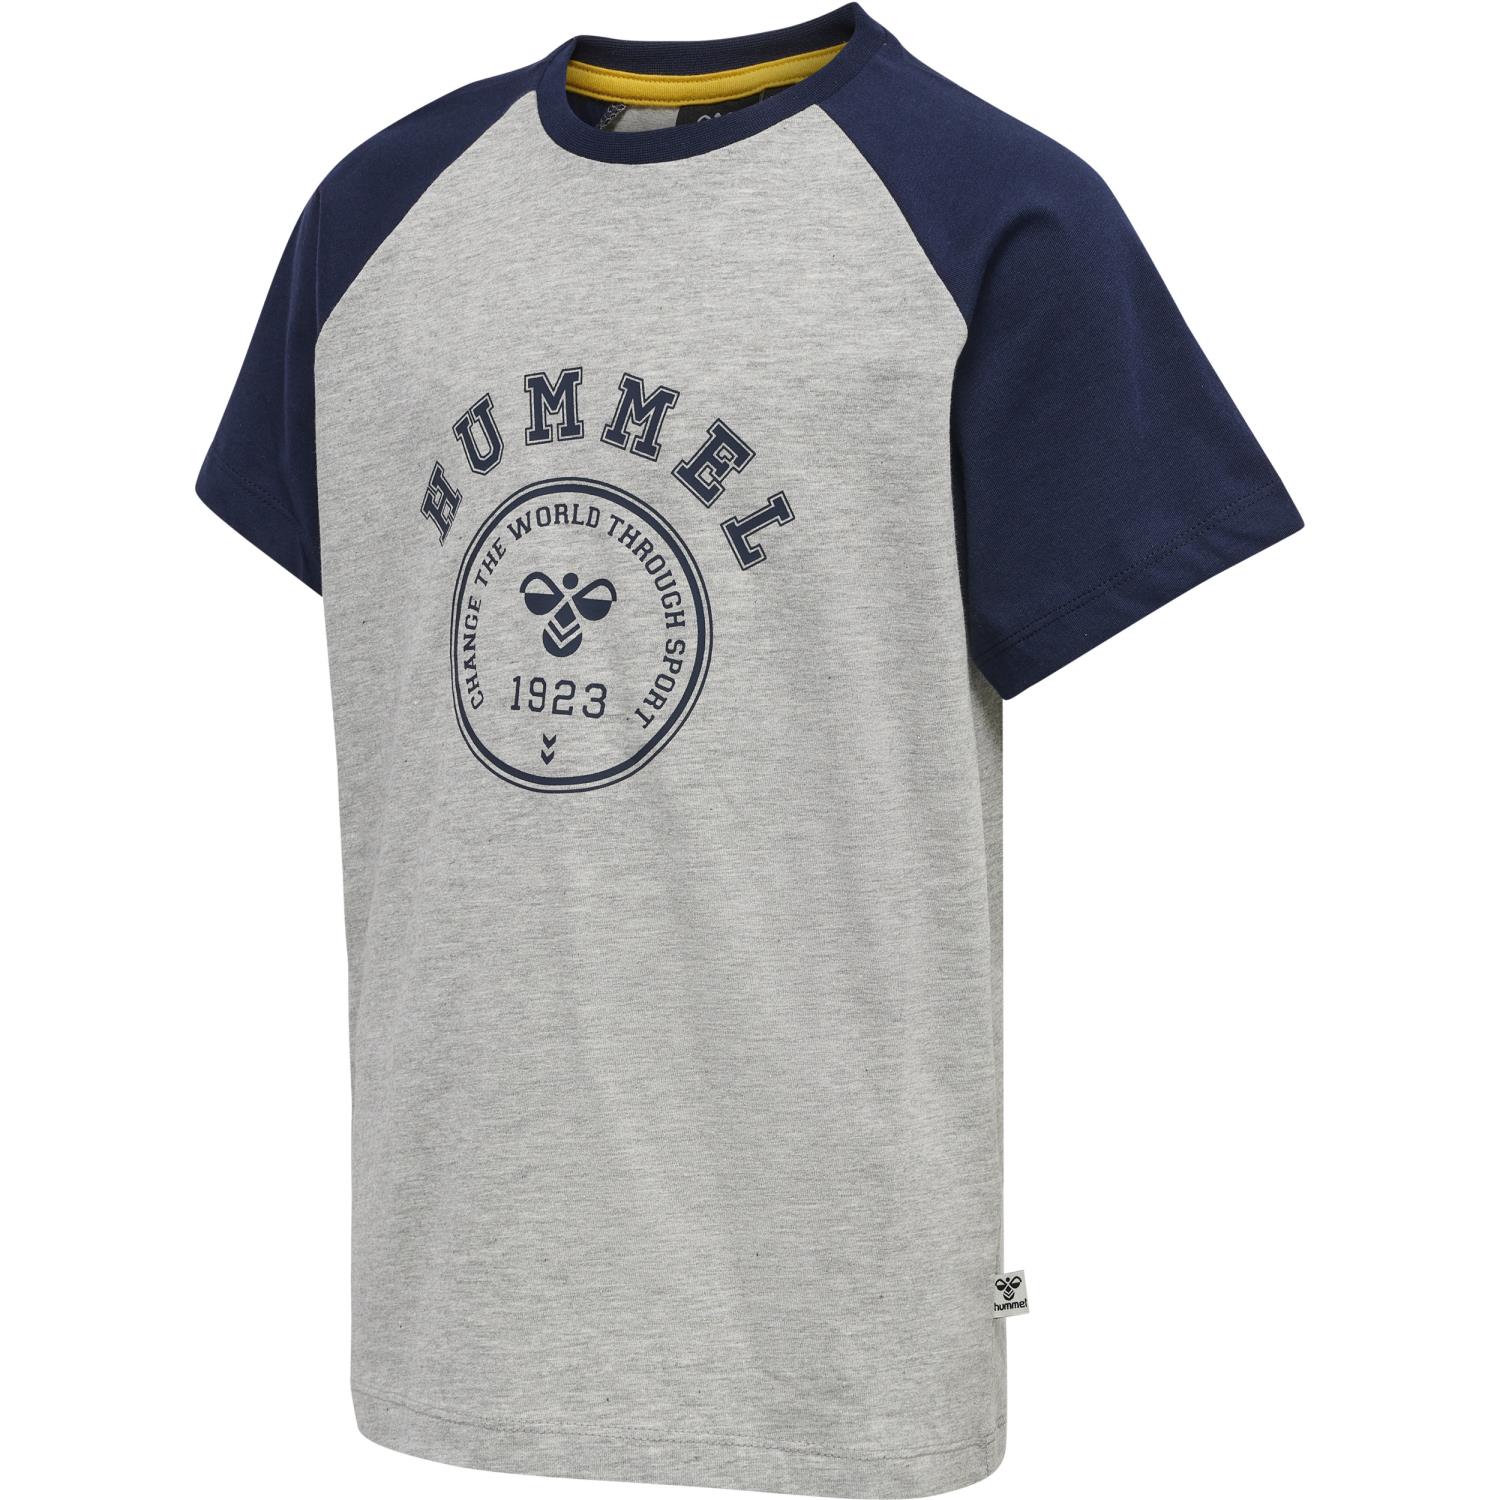 Hummel Physics T-shirt - Grey Melange